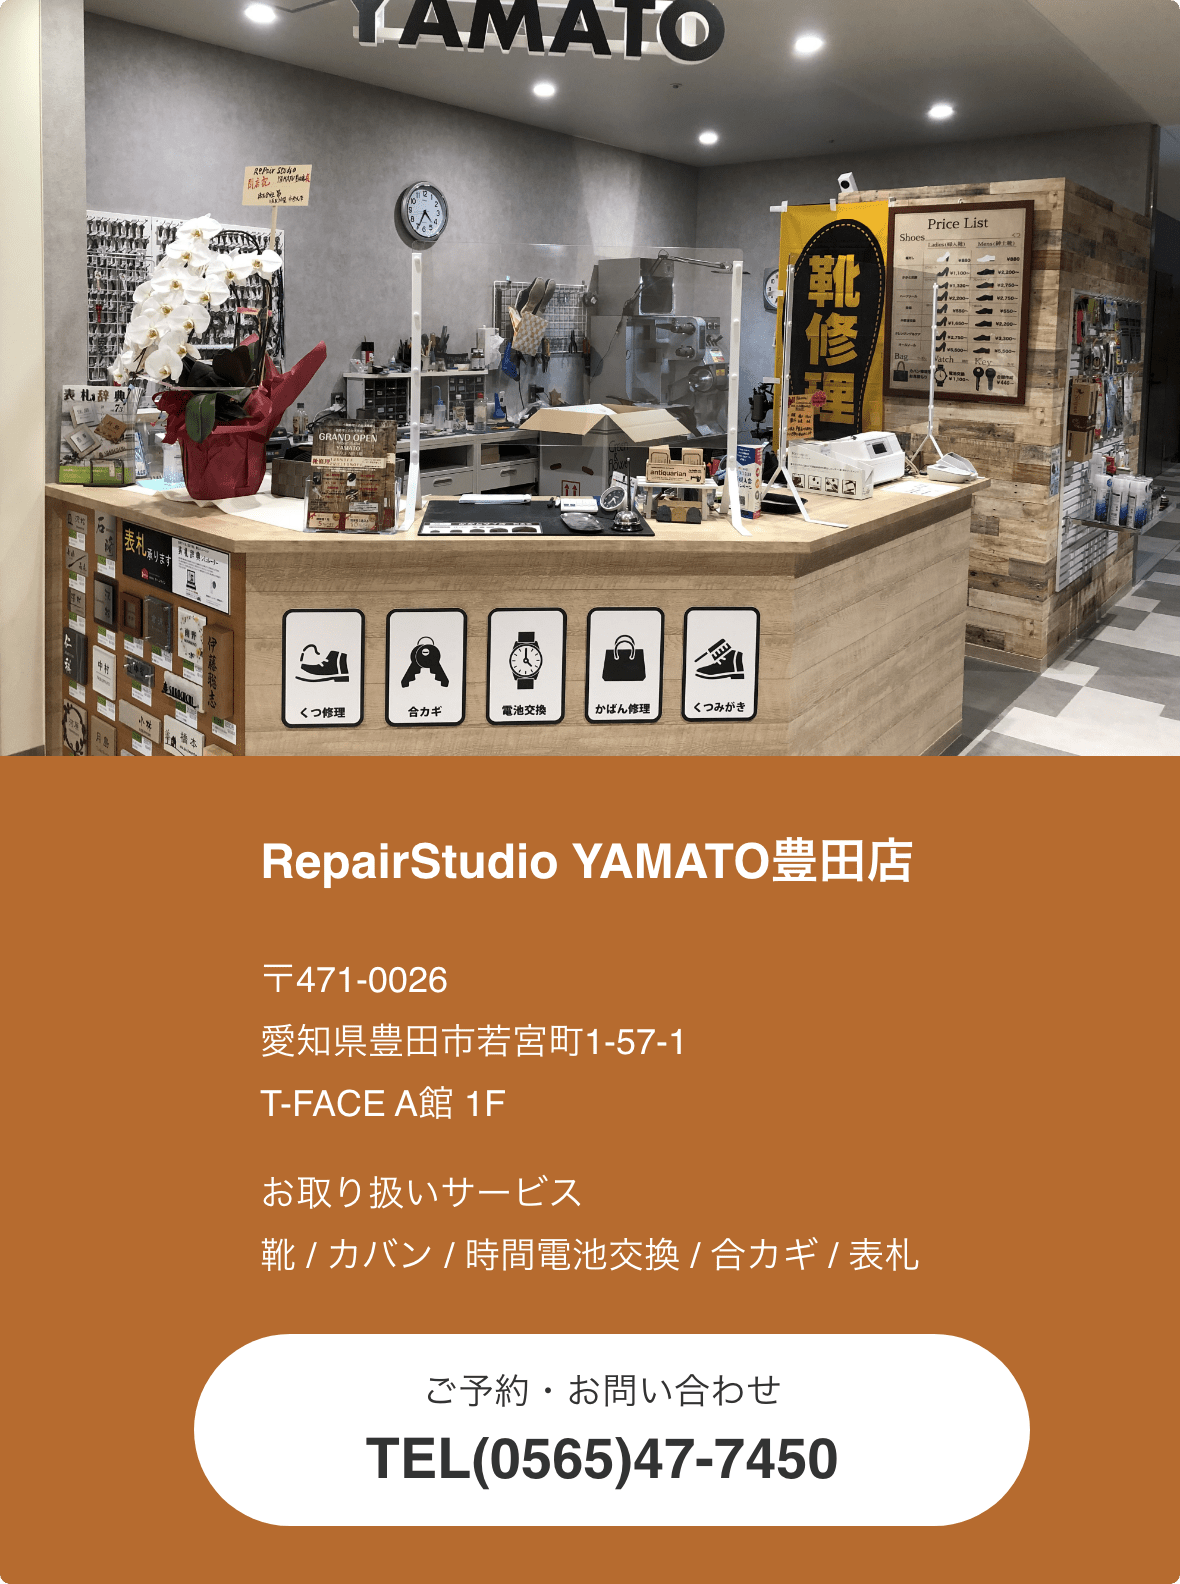 RepairStudio YAMATO豊田店:ご予約・お問い合わせ TEL0565-47-7450